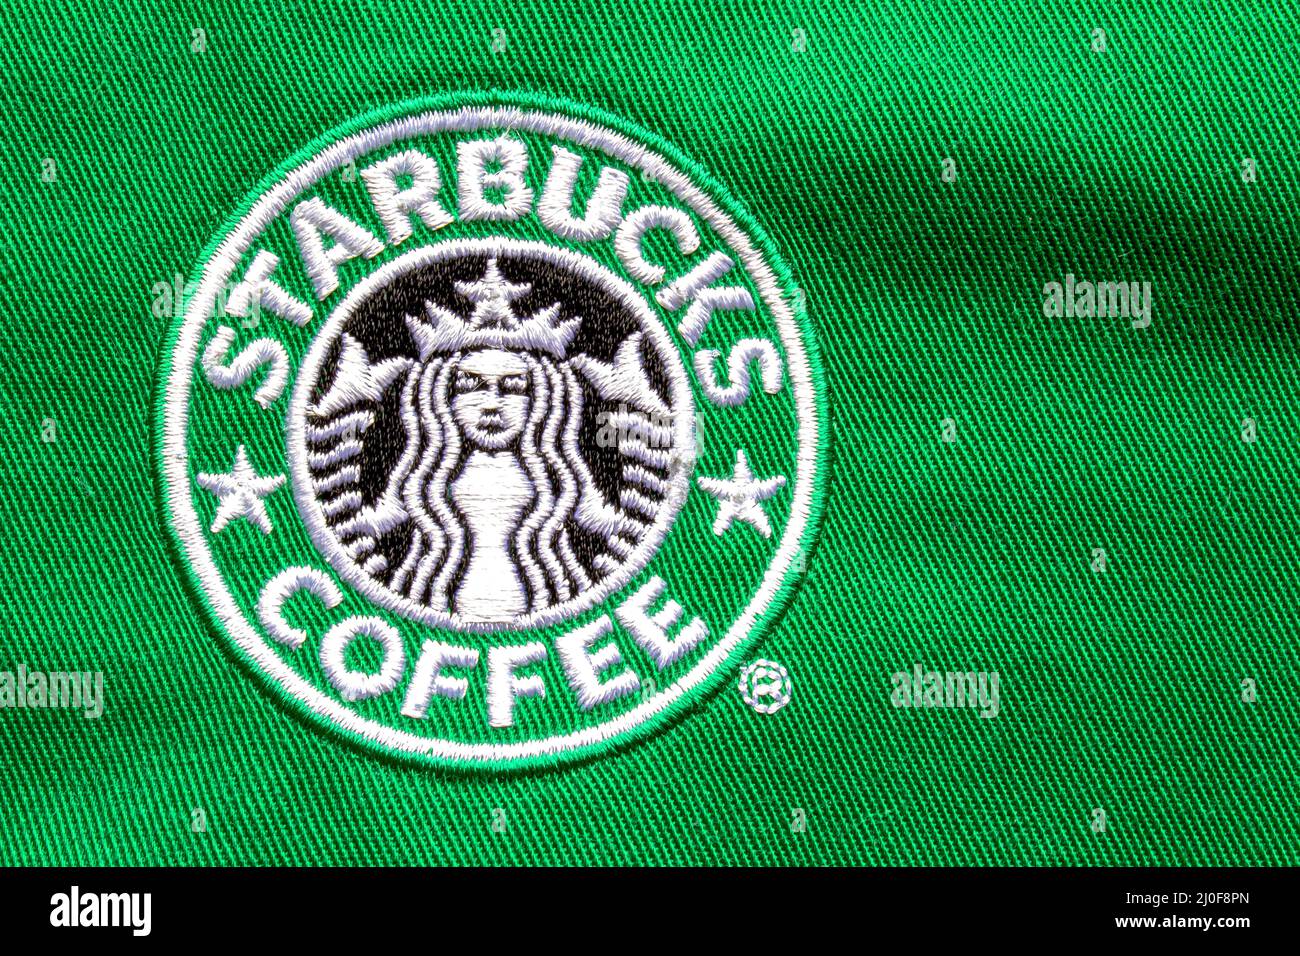 Calgary, Alberta, Canada. Aug 2, 2020. Close up of a Starbucks Coffee logo on a green apron. Stock Photo